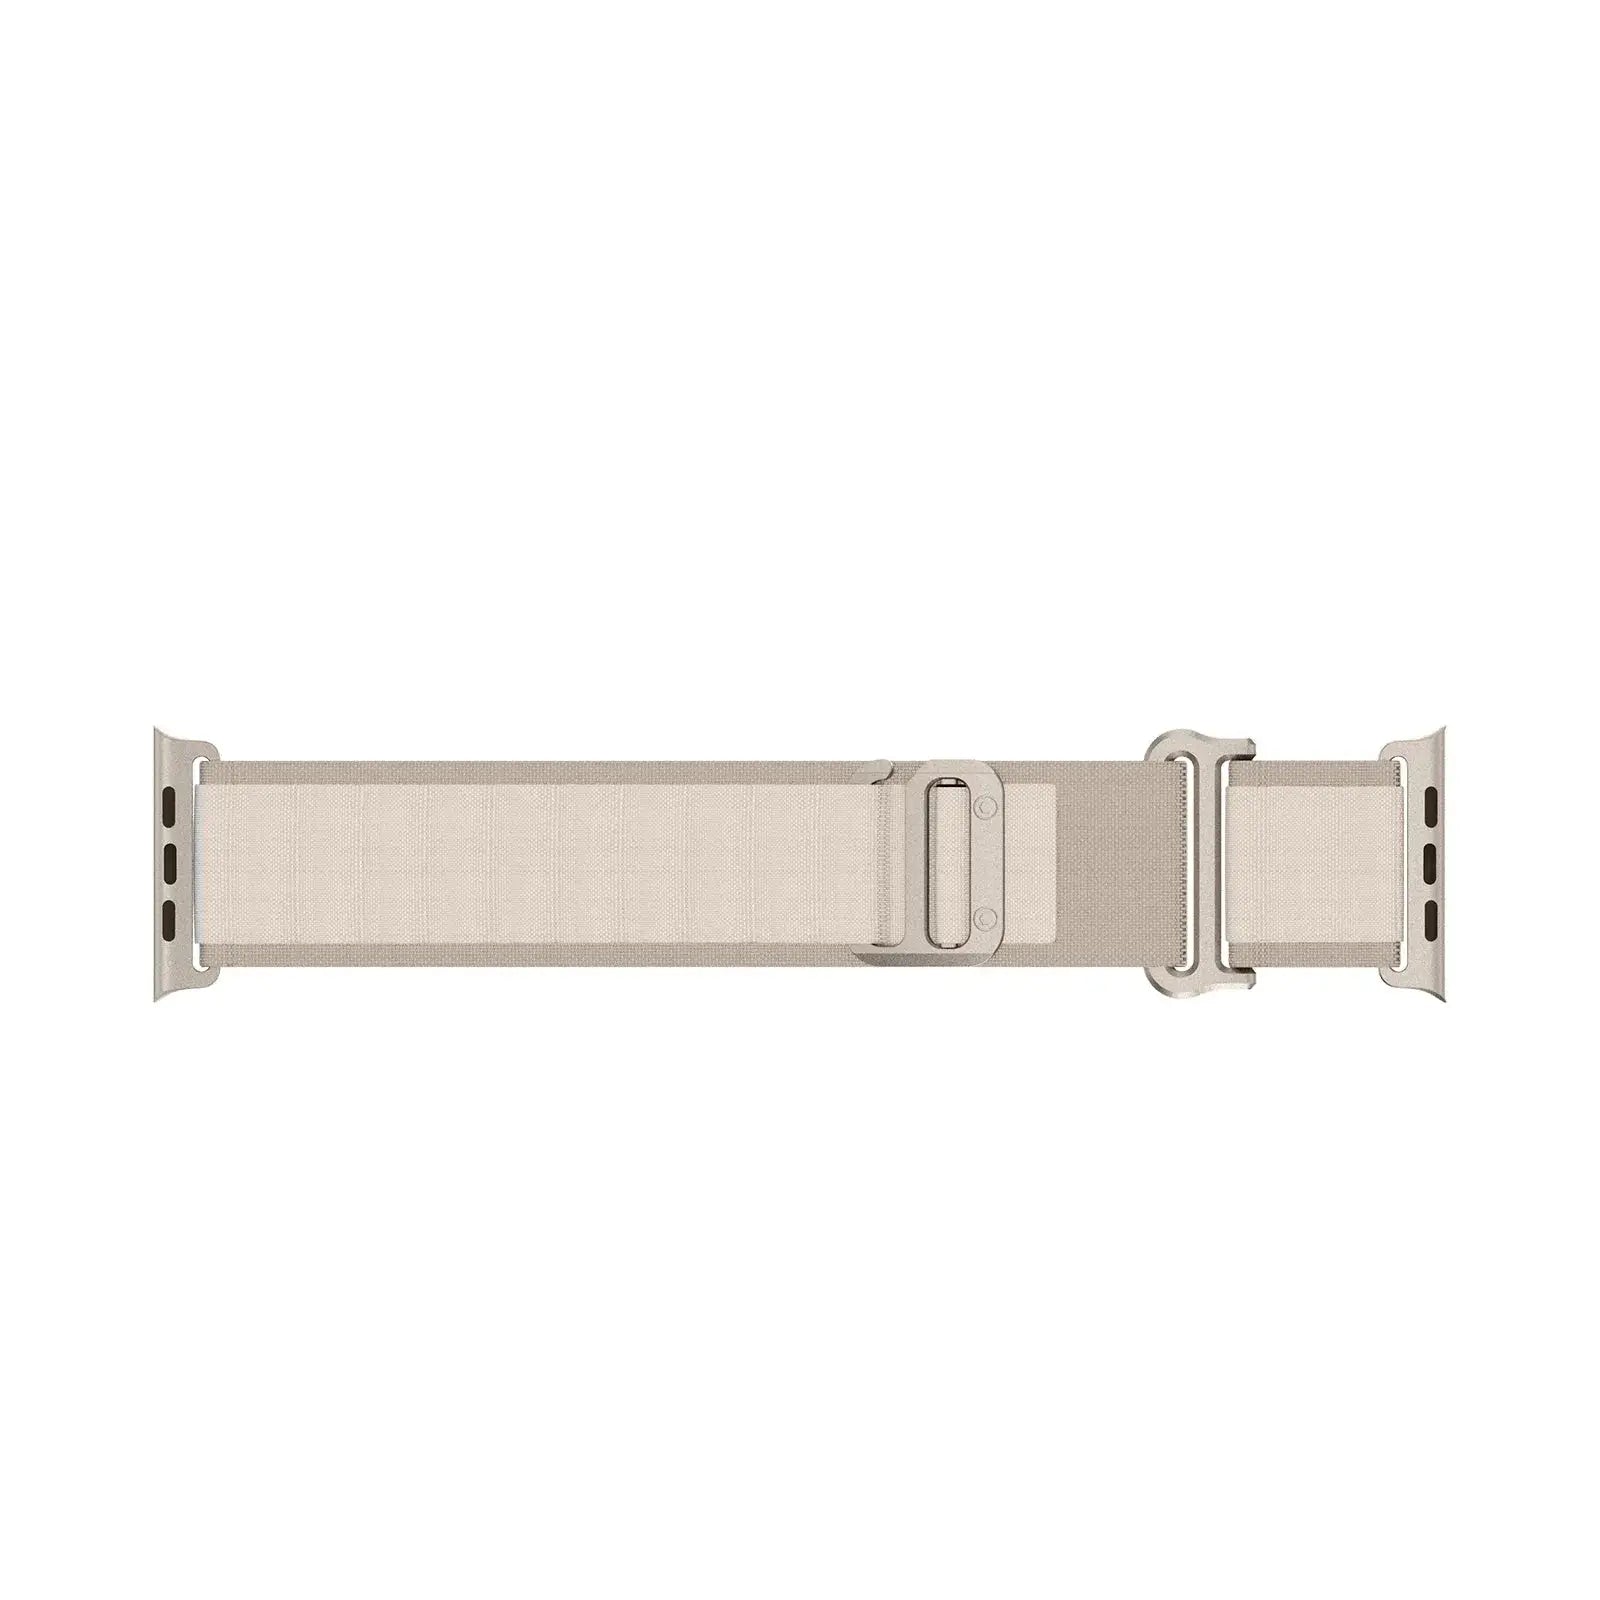 Order Spigen DuraPro Flex bracelet with free shipping • Loop Nation